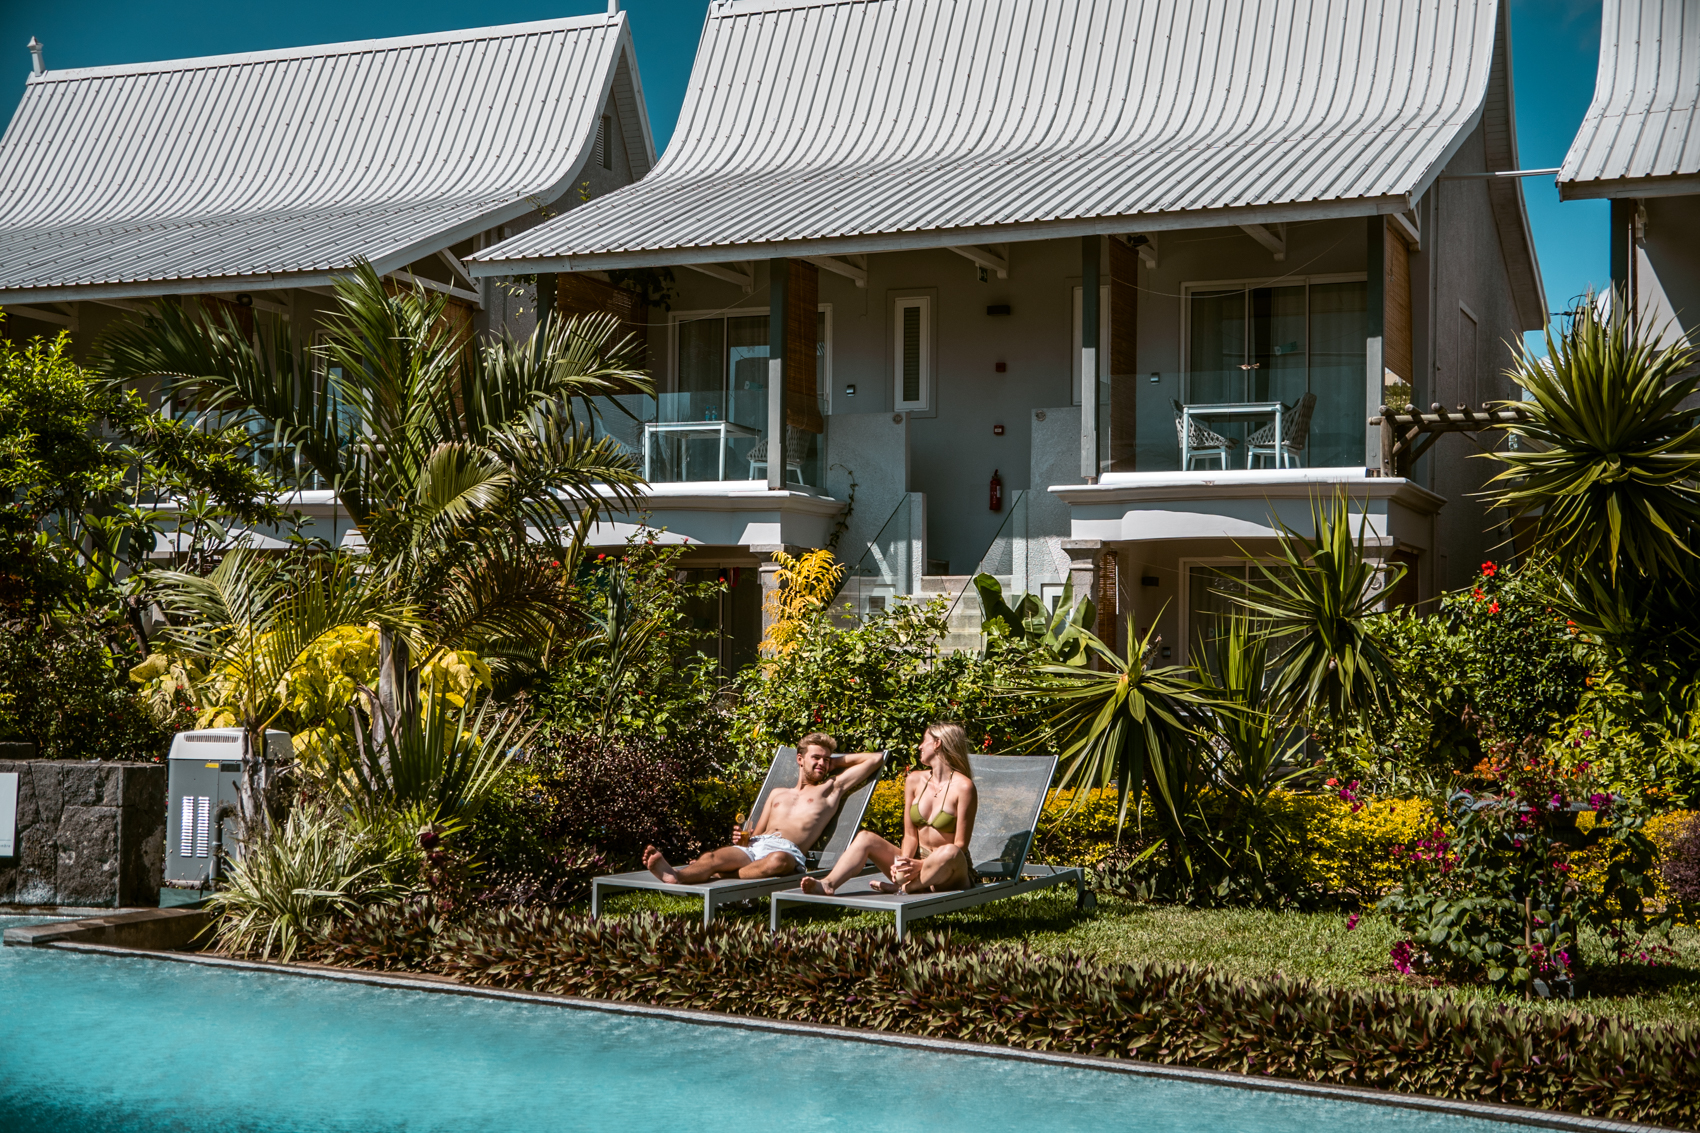 La Mariposa hotel, Mauritius